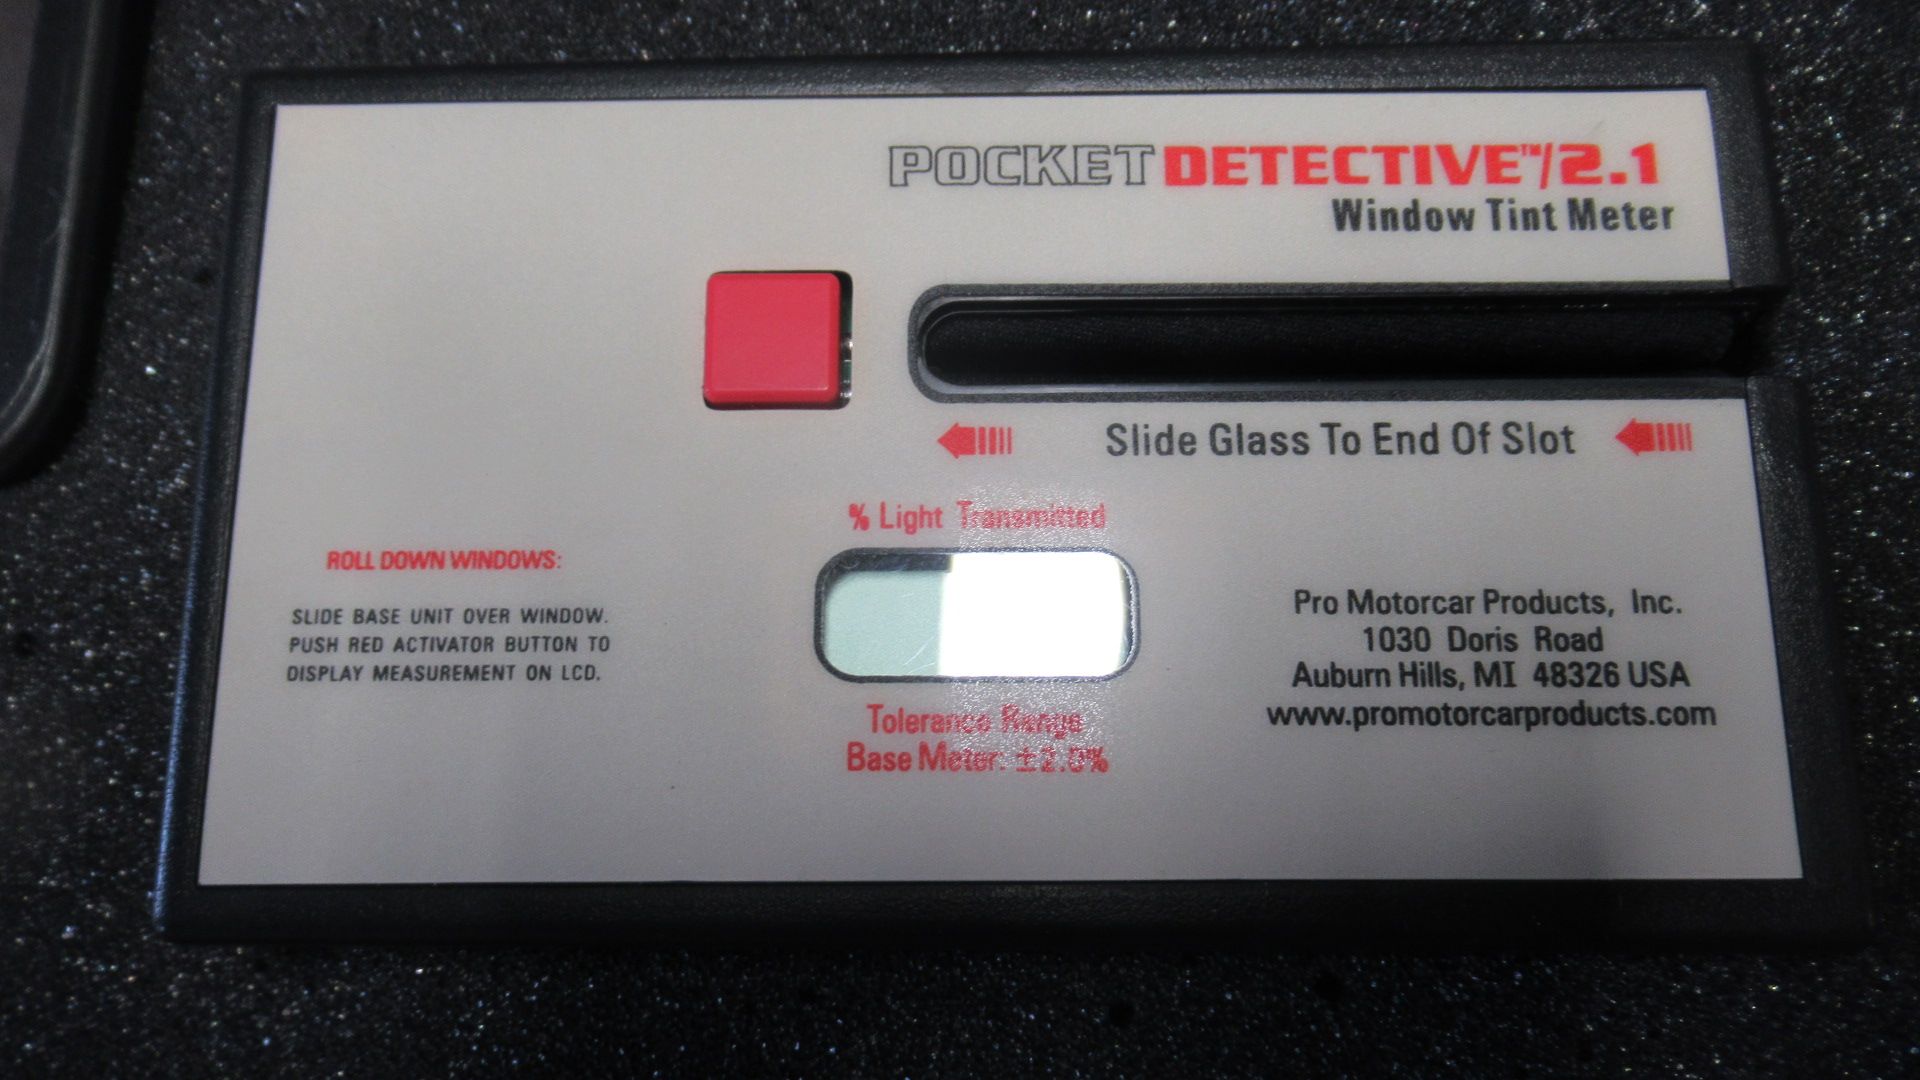 POCKET DETECTIVE 2.1 WINDOW TINT METER MONROE PMC-8010